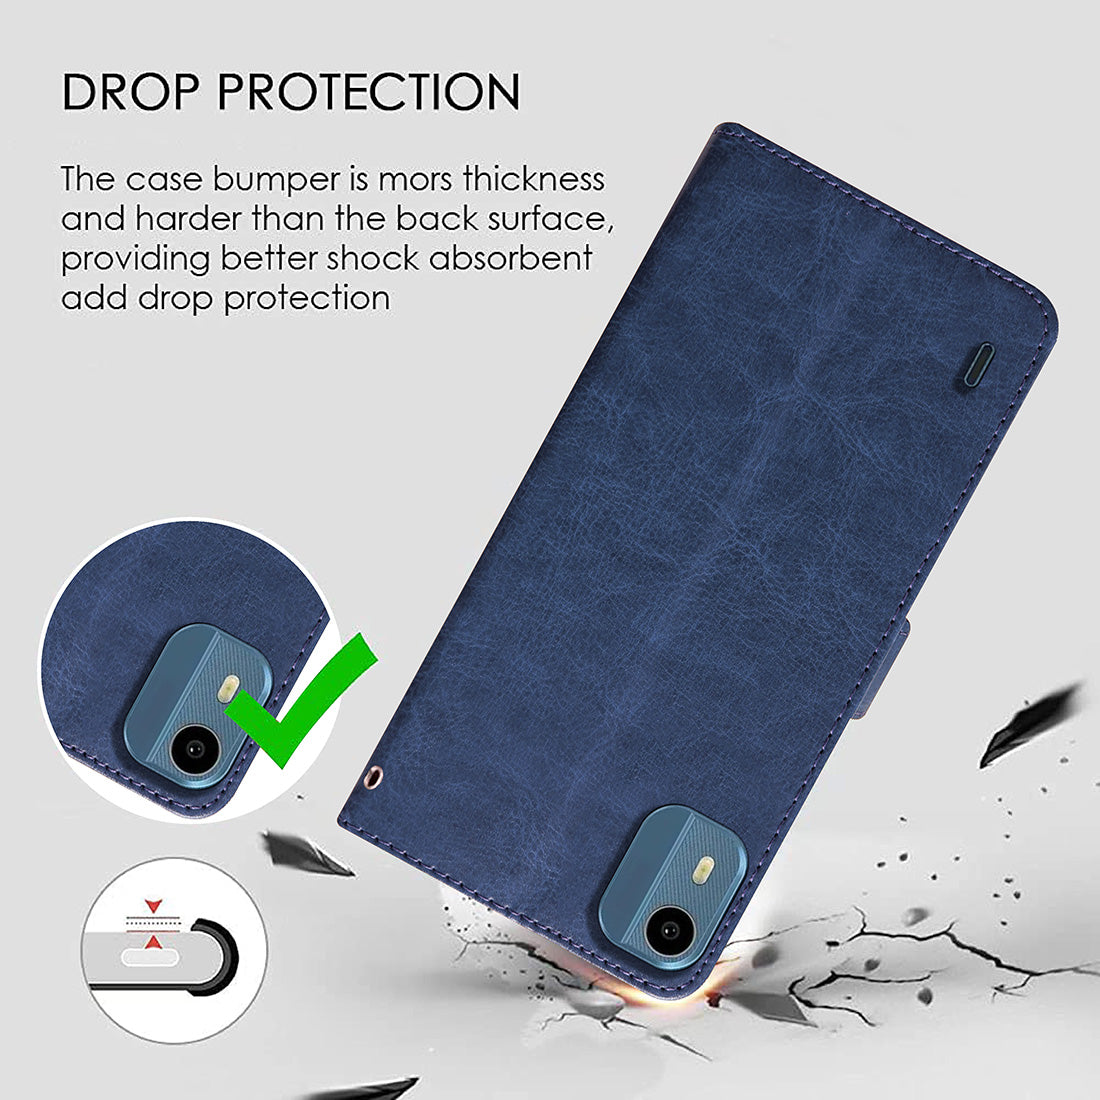 Premium Wallet Flip Cover for Nokia C12 Pro 4G